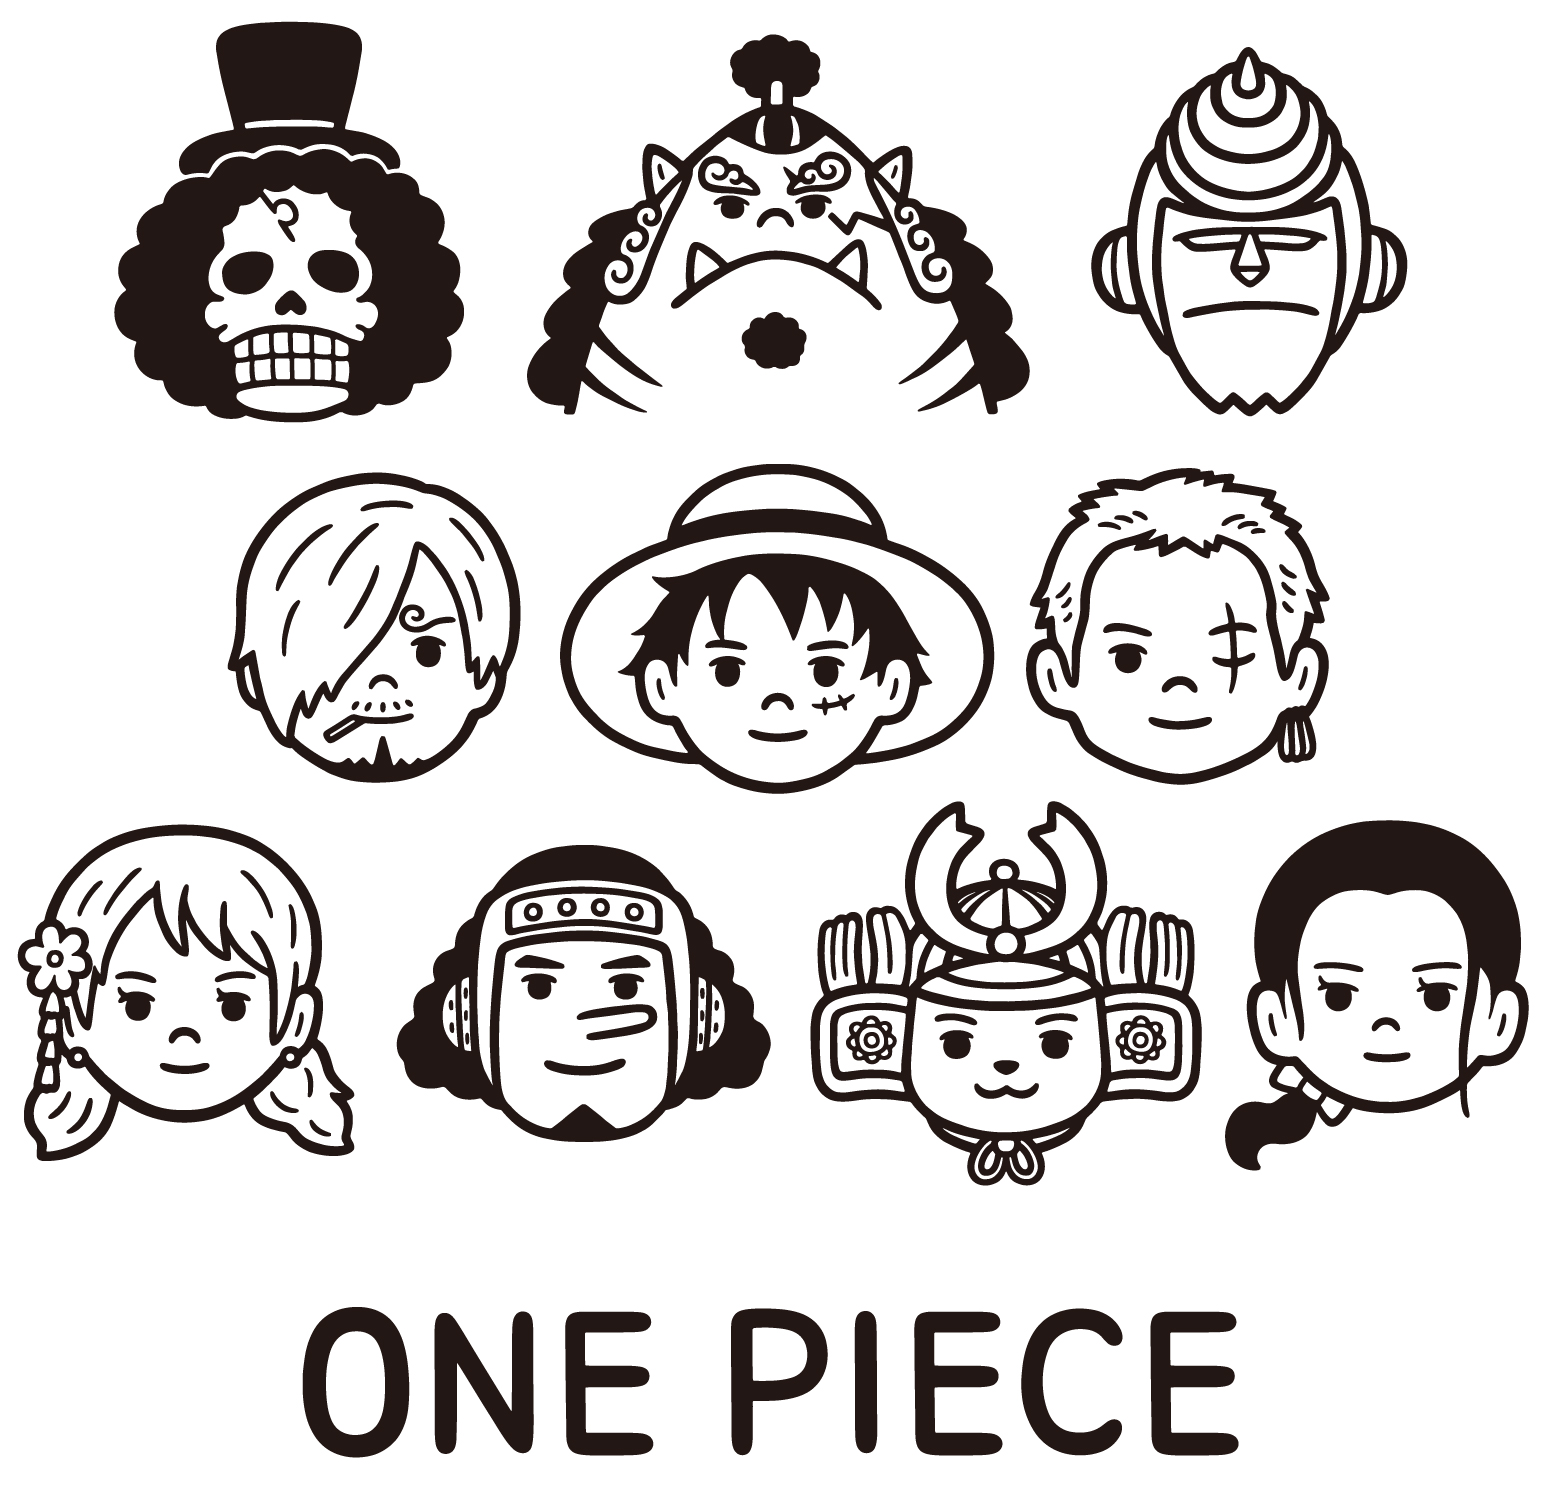 One Pieceコミックス100巻 アニメ1000話を記念 アニメ One Piece と人気イラストレーター Noritake がコラボ 株式会社サニーサイドアップグループのプレスリリース